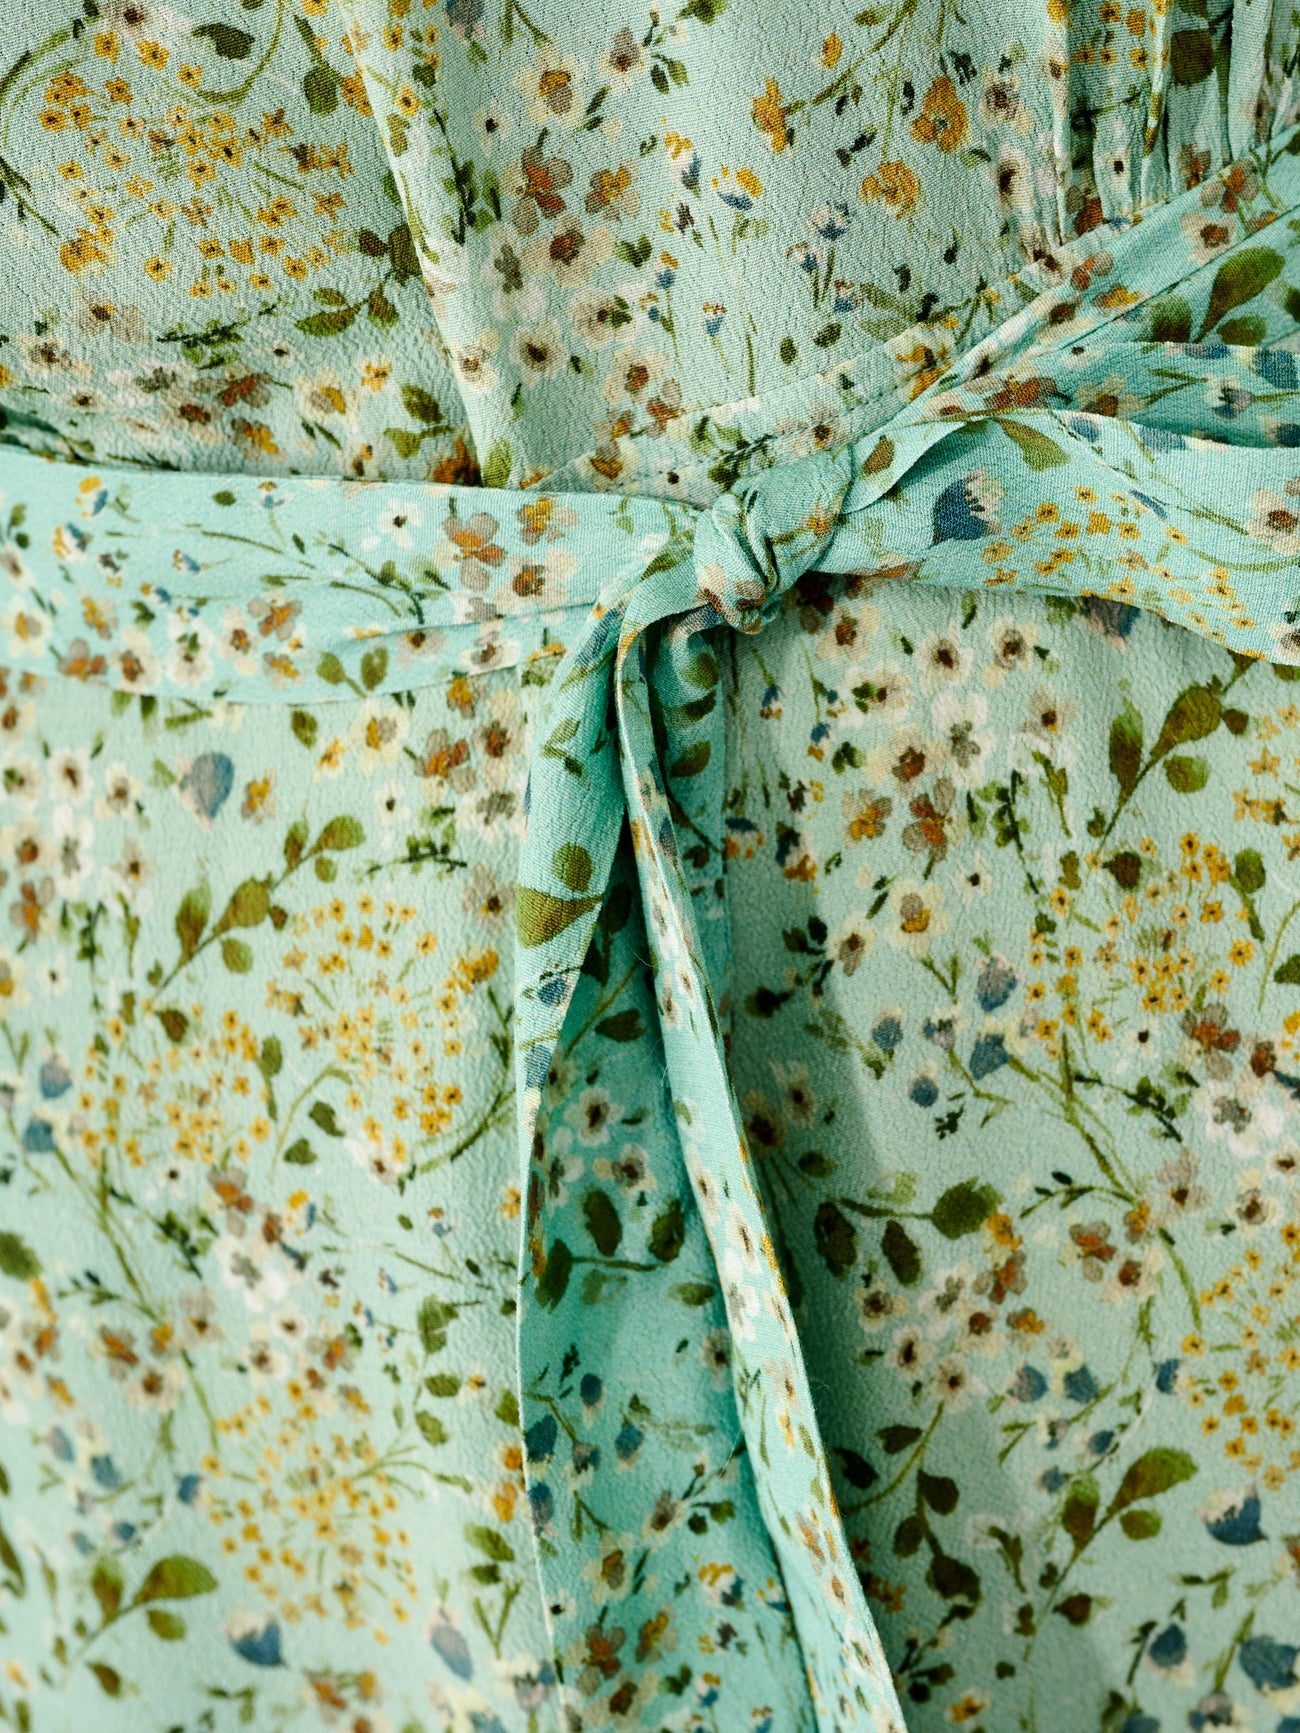 Bellerose - Vikka Dress: Green Floral